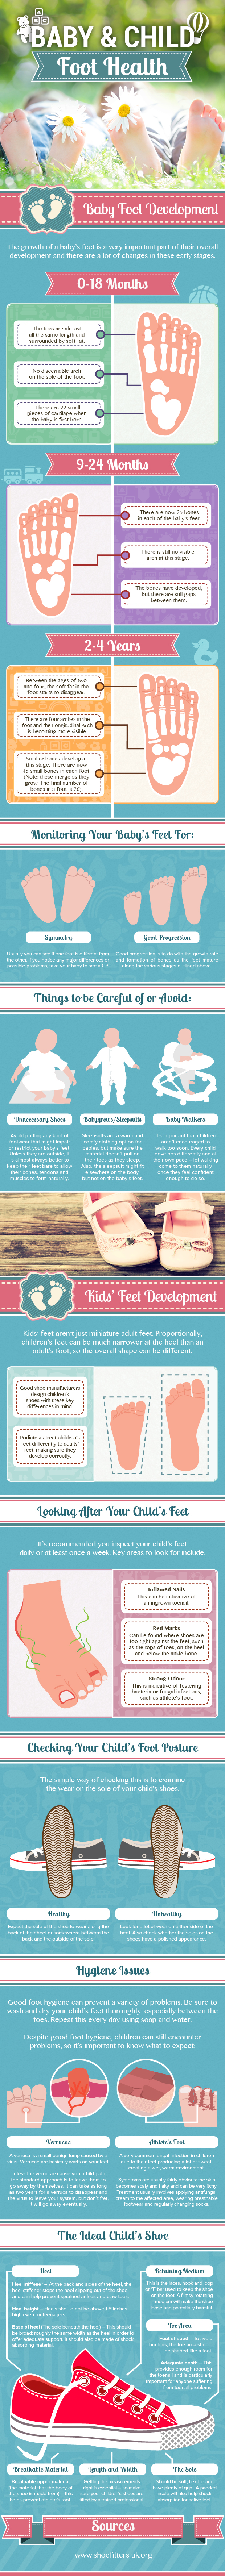 Child foot health